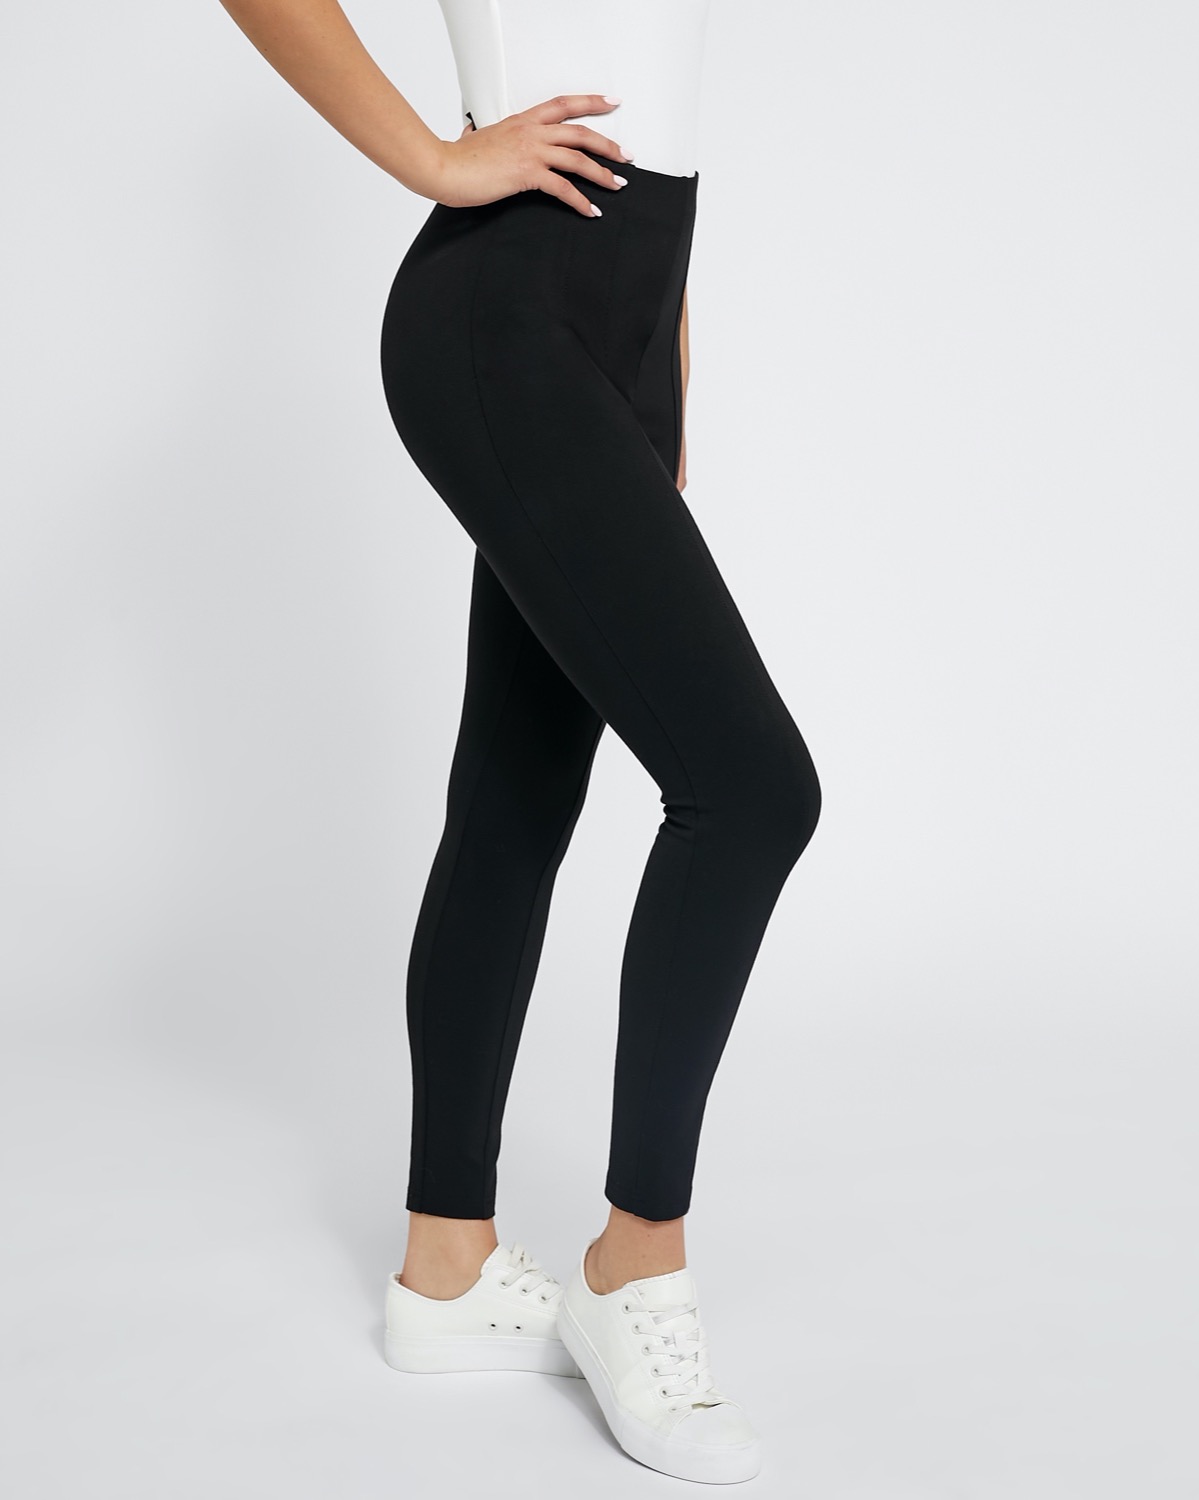 High Waist stretch leggings with waist trainer – Gorgeous Clientele VIP